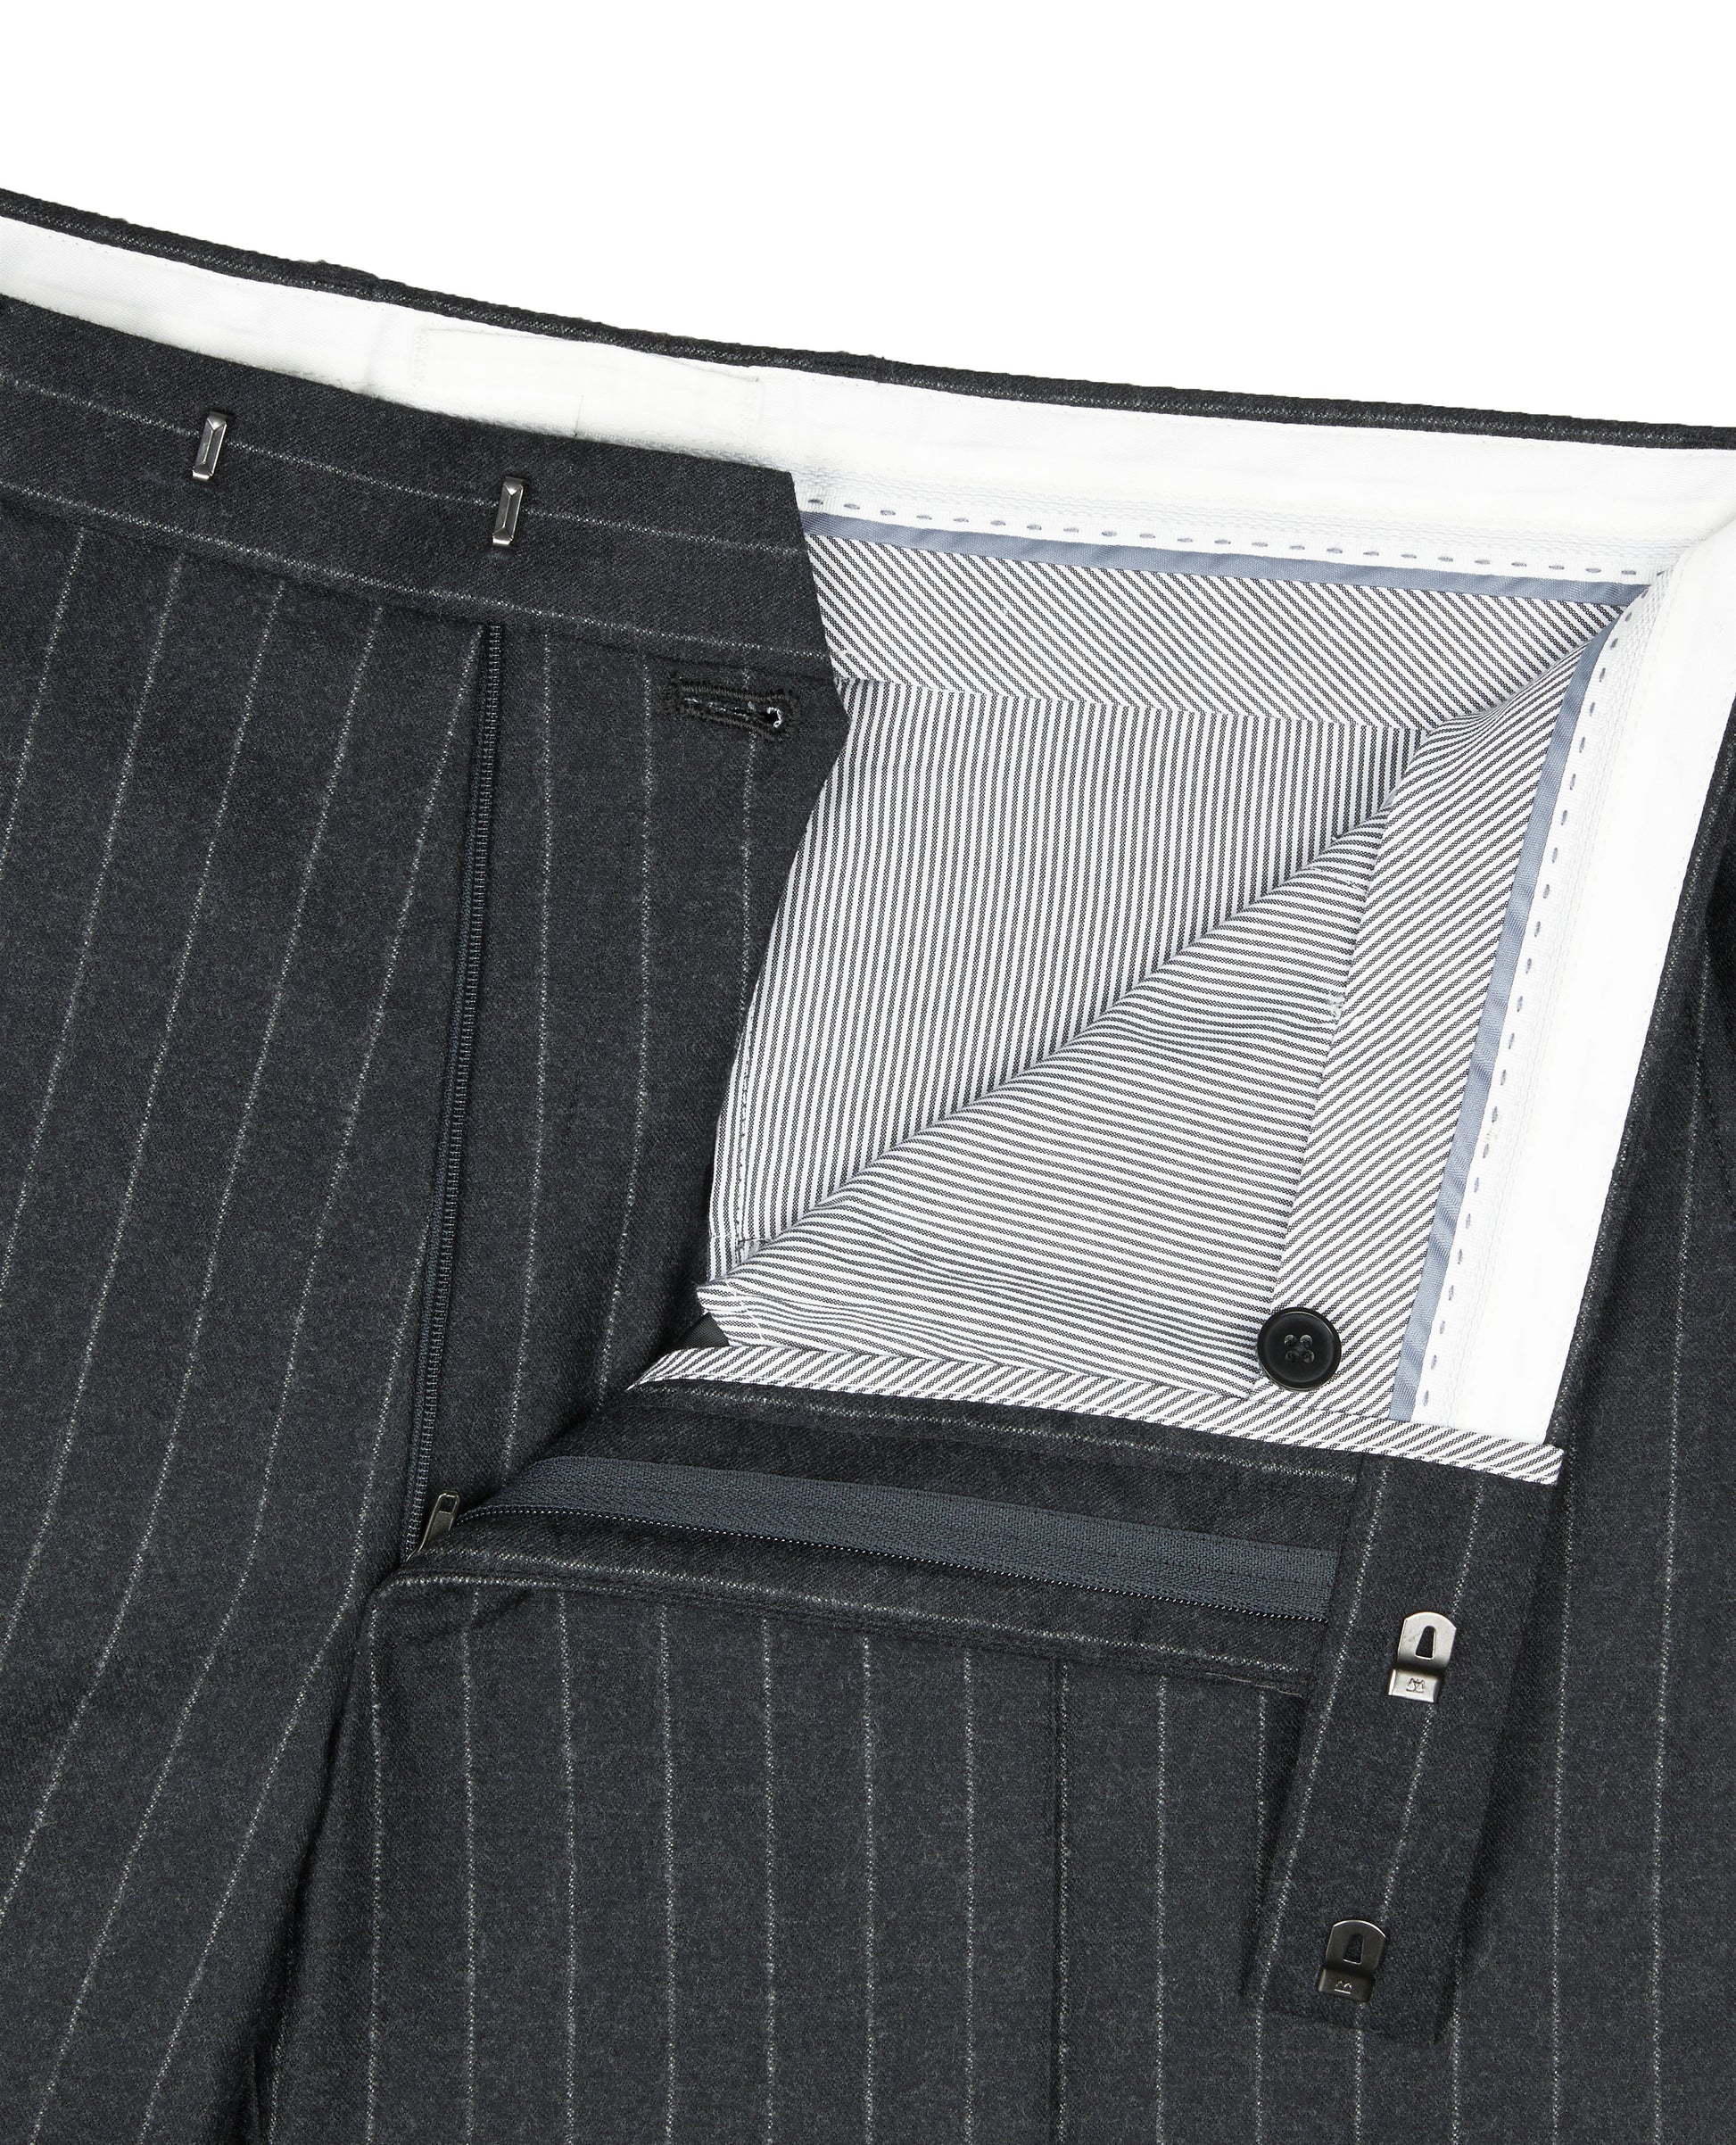 Image 3 of Betjeman Barberis Slim Fit Charcoal Pinstripe Trousers